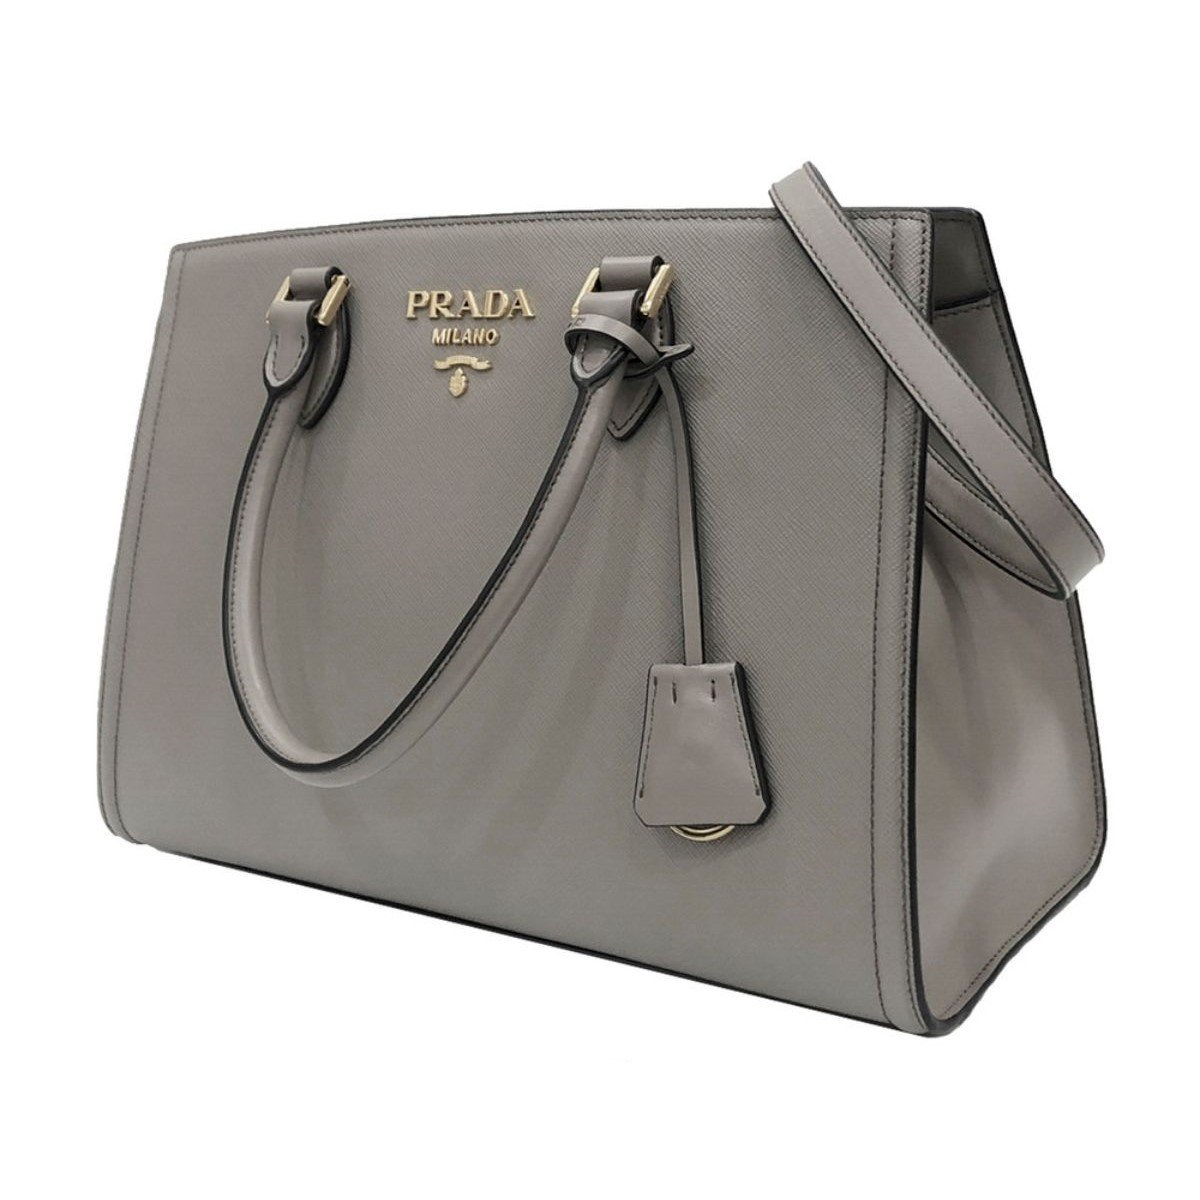 Prada Argilla Gray Saffiano Lux Leather Large Satchel Handbag - LUXURYMRKT